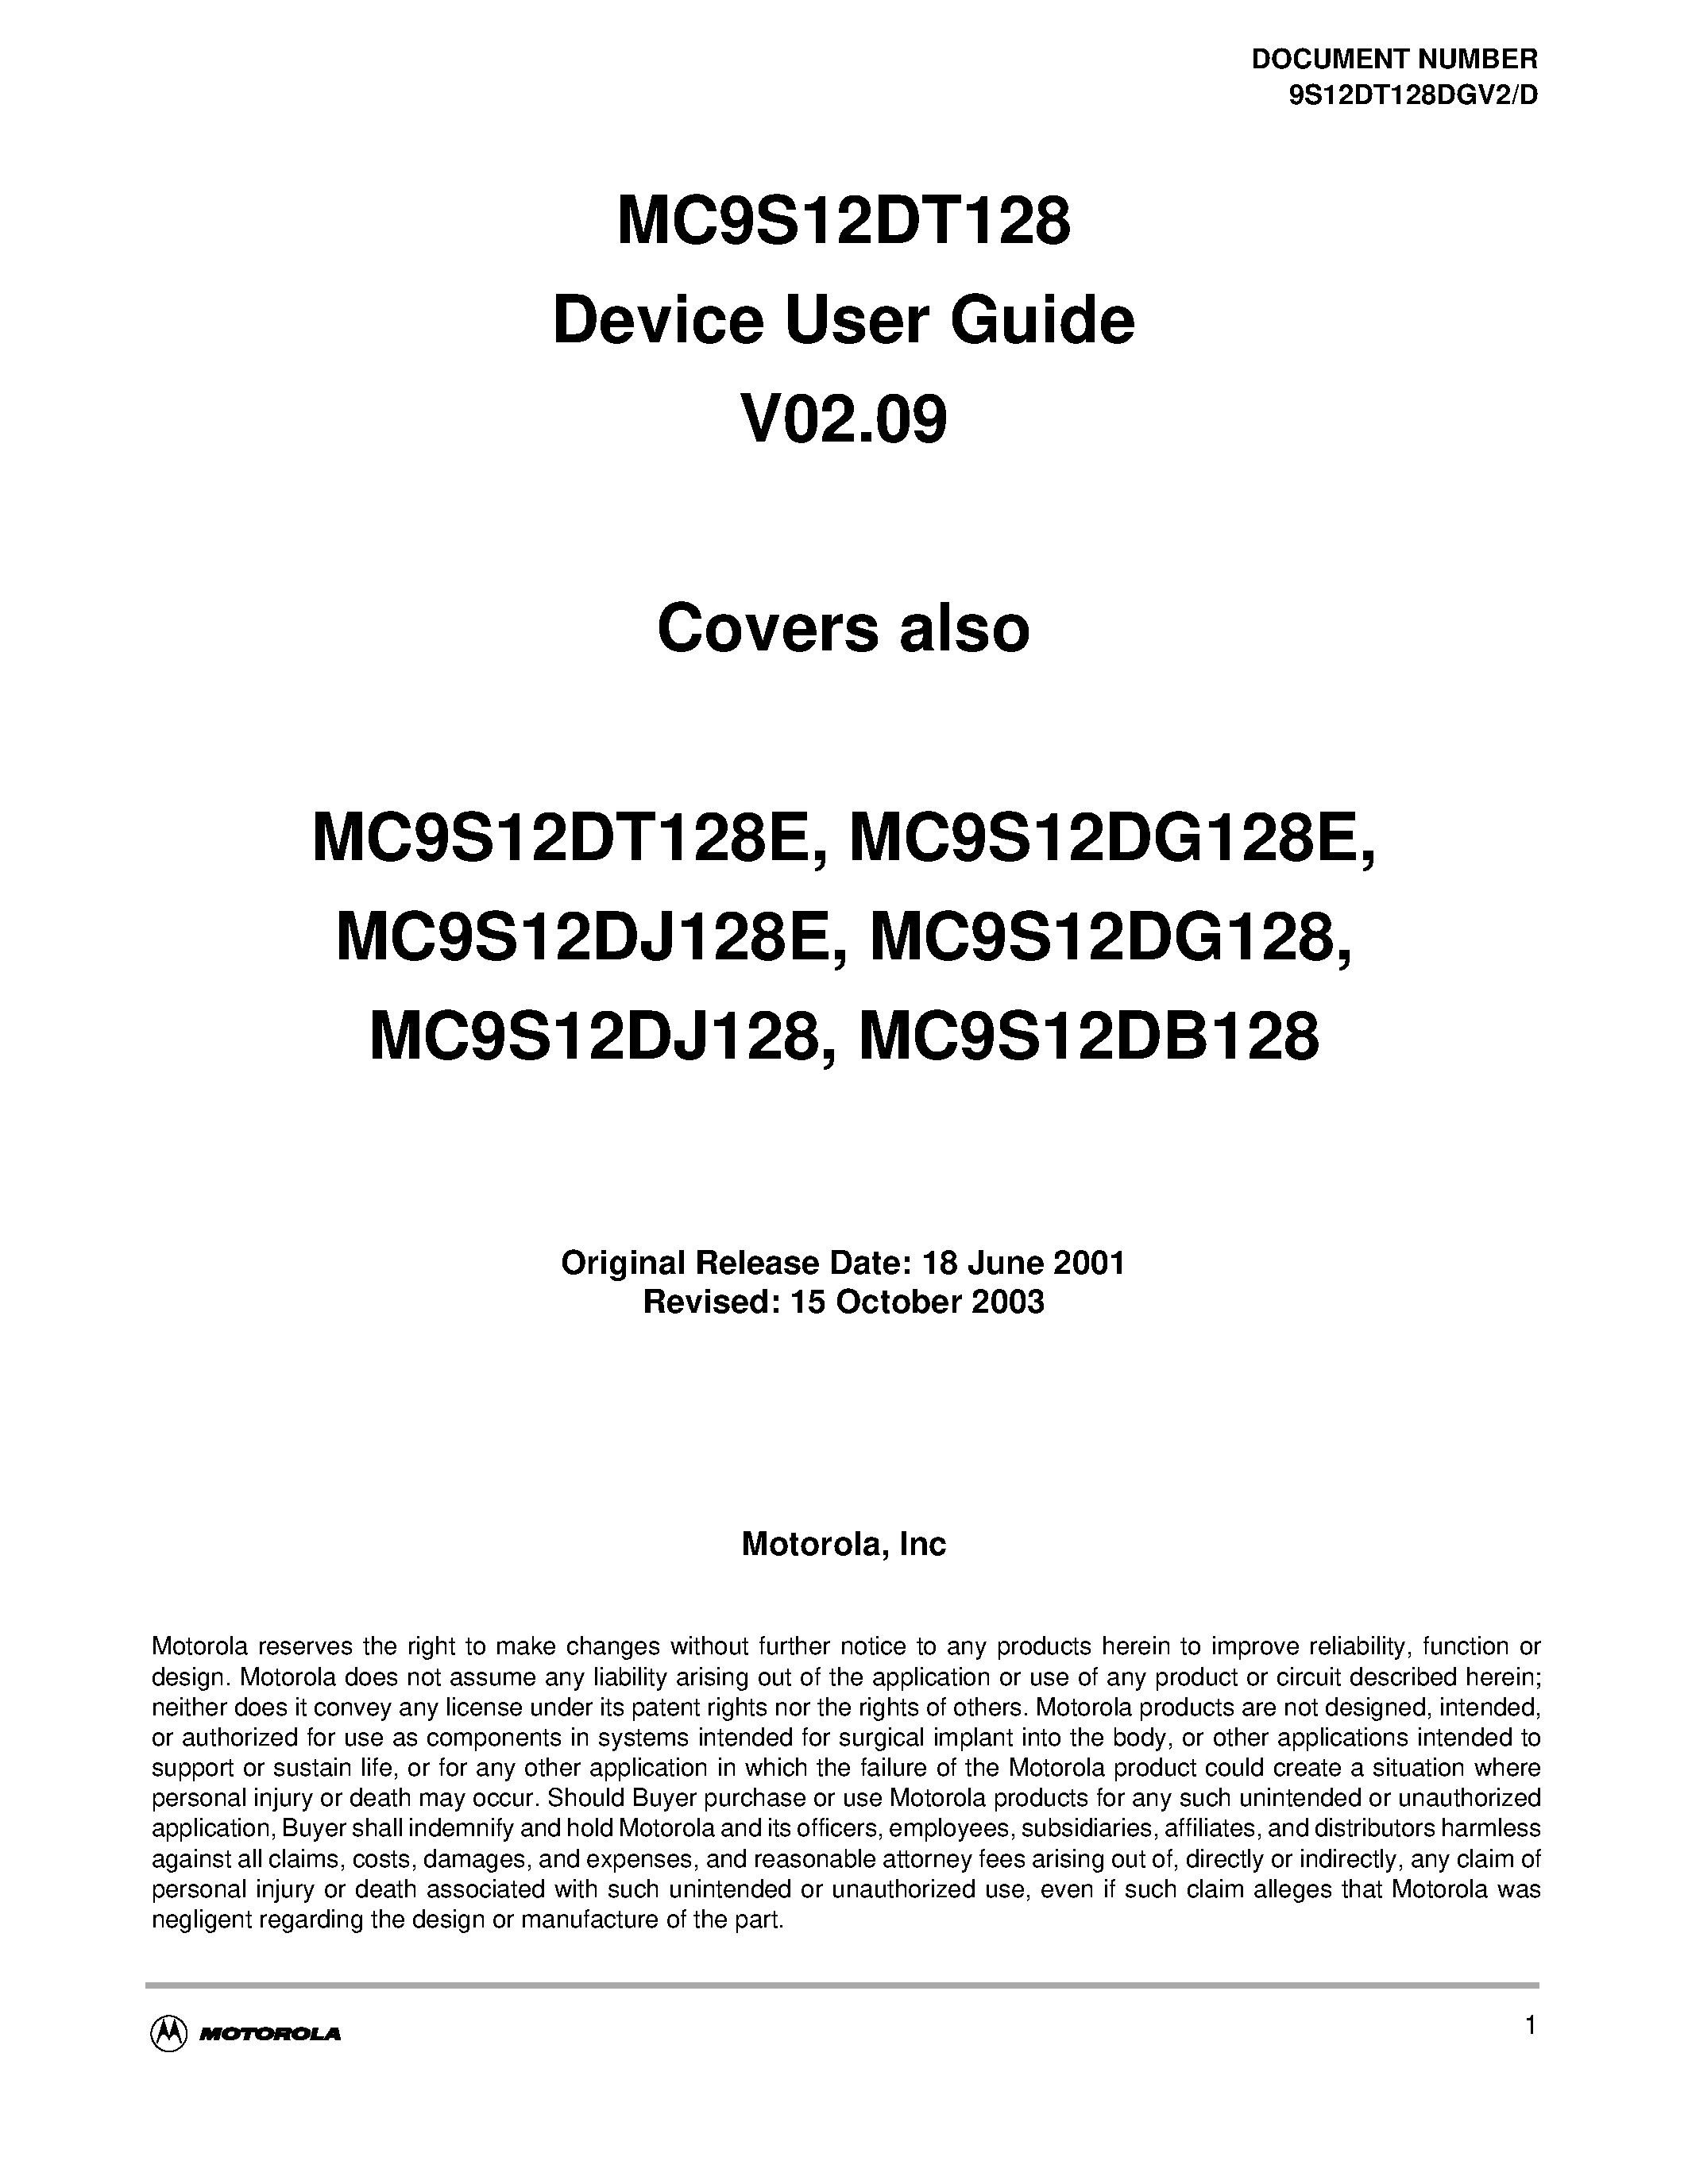 Datasheet S12FTS128KV2D - MC9S12DT128 Device User Guide V02.09 page 1